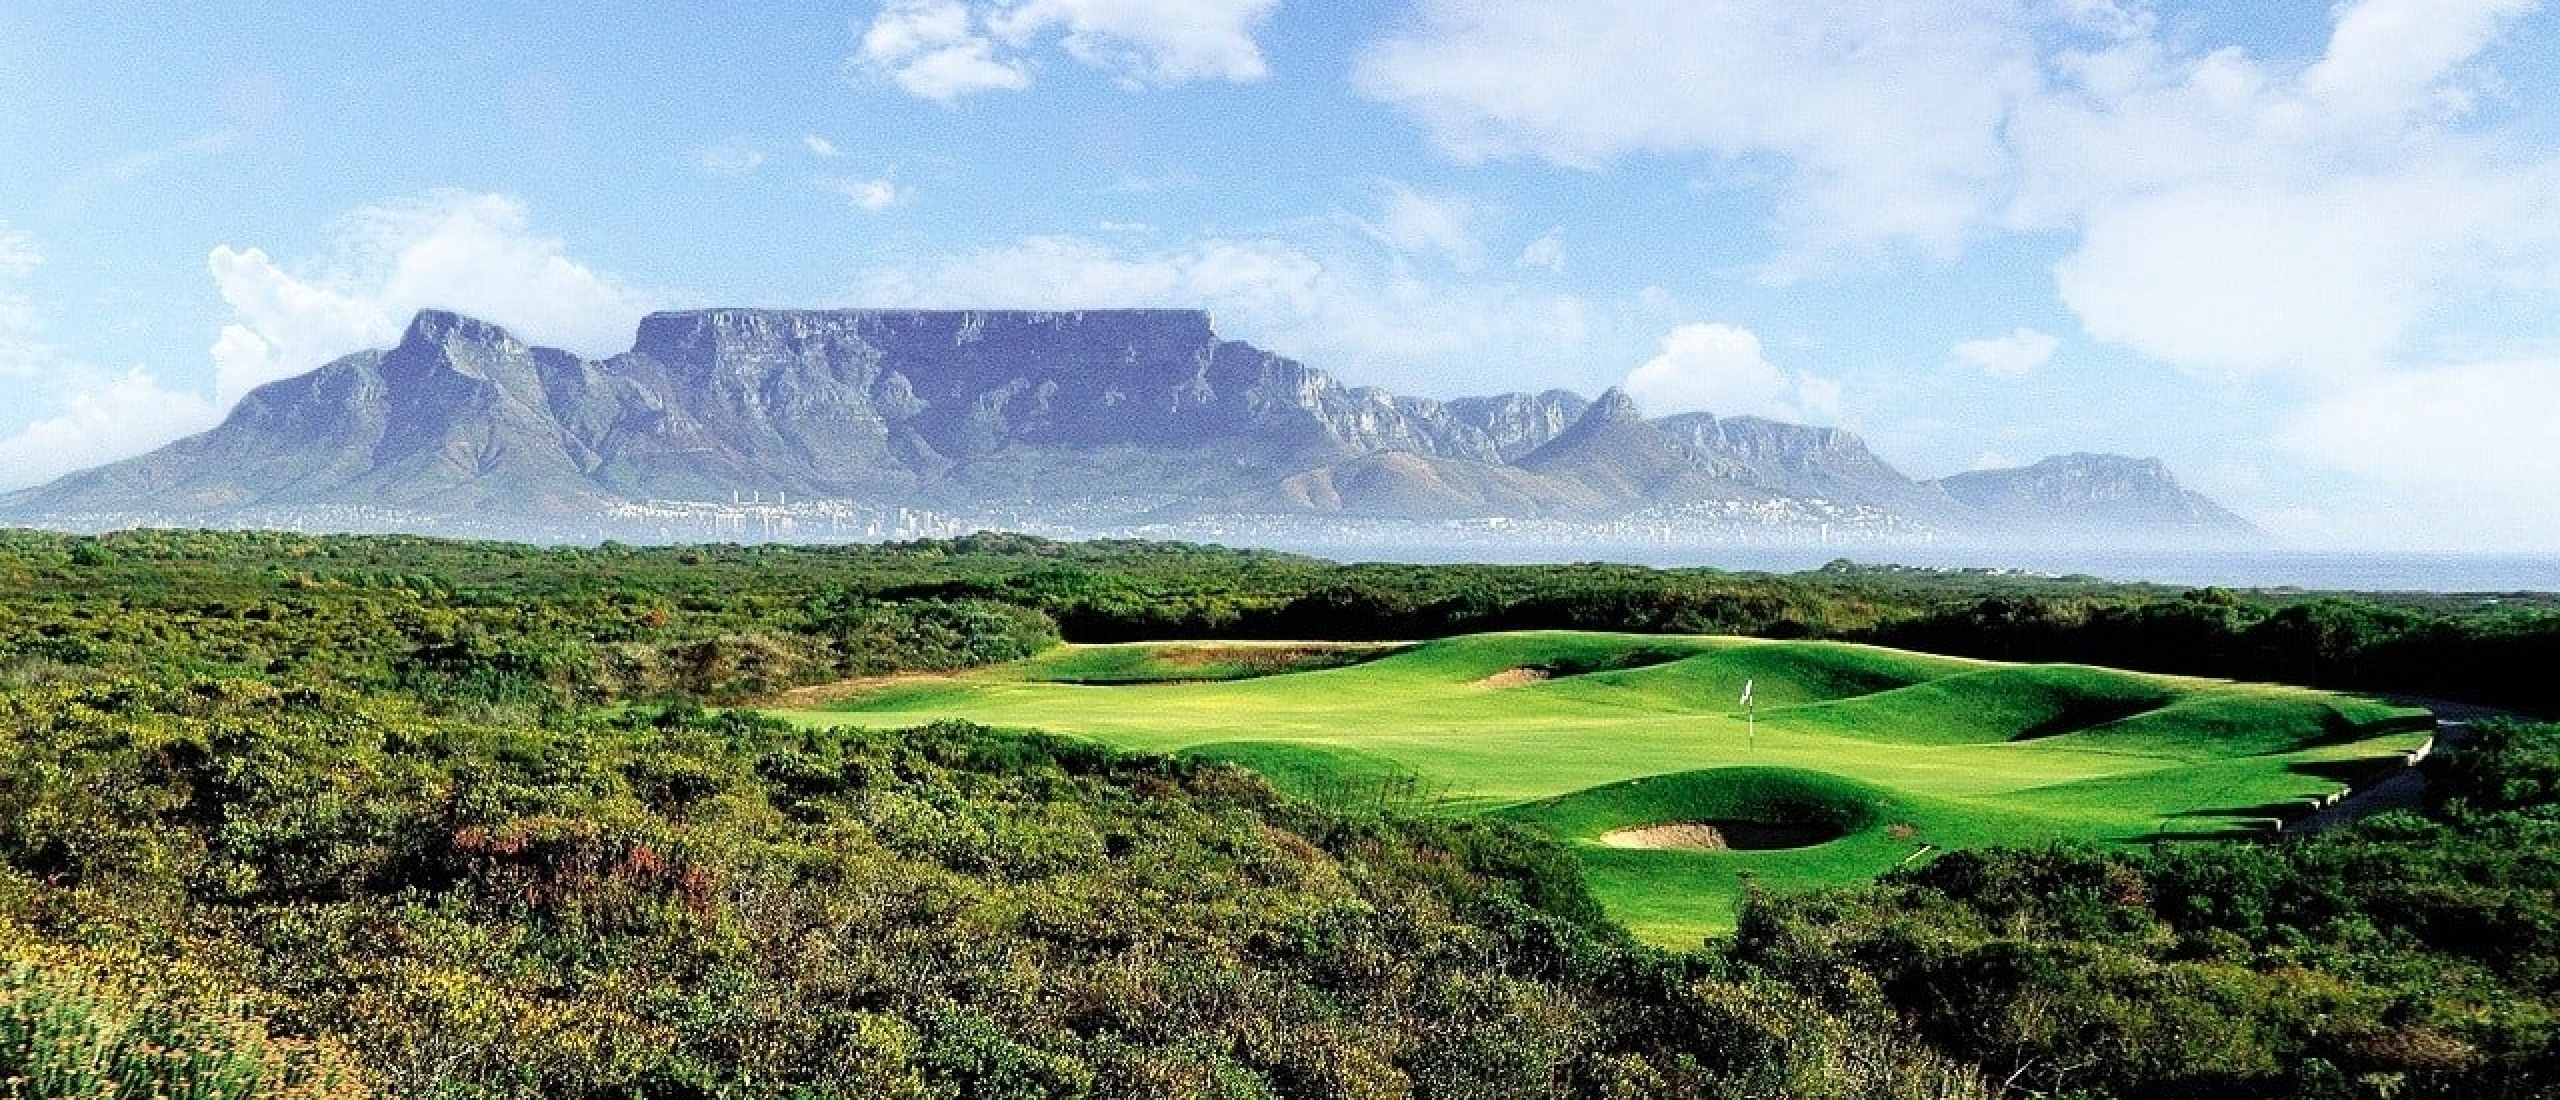 Top 5 Golfcourses Zuid-Afrika 2019-2020